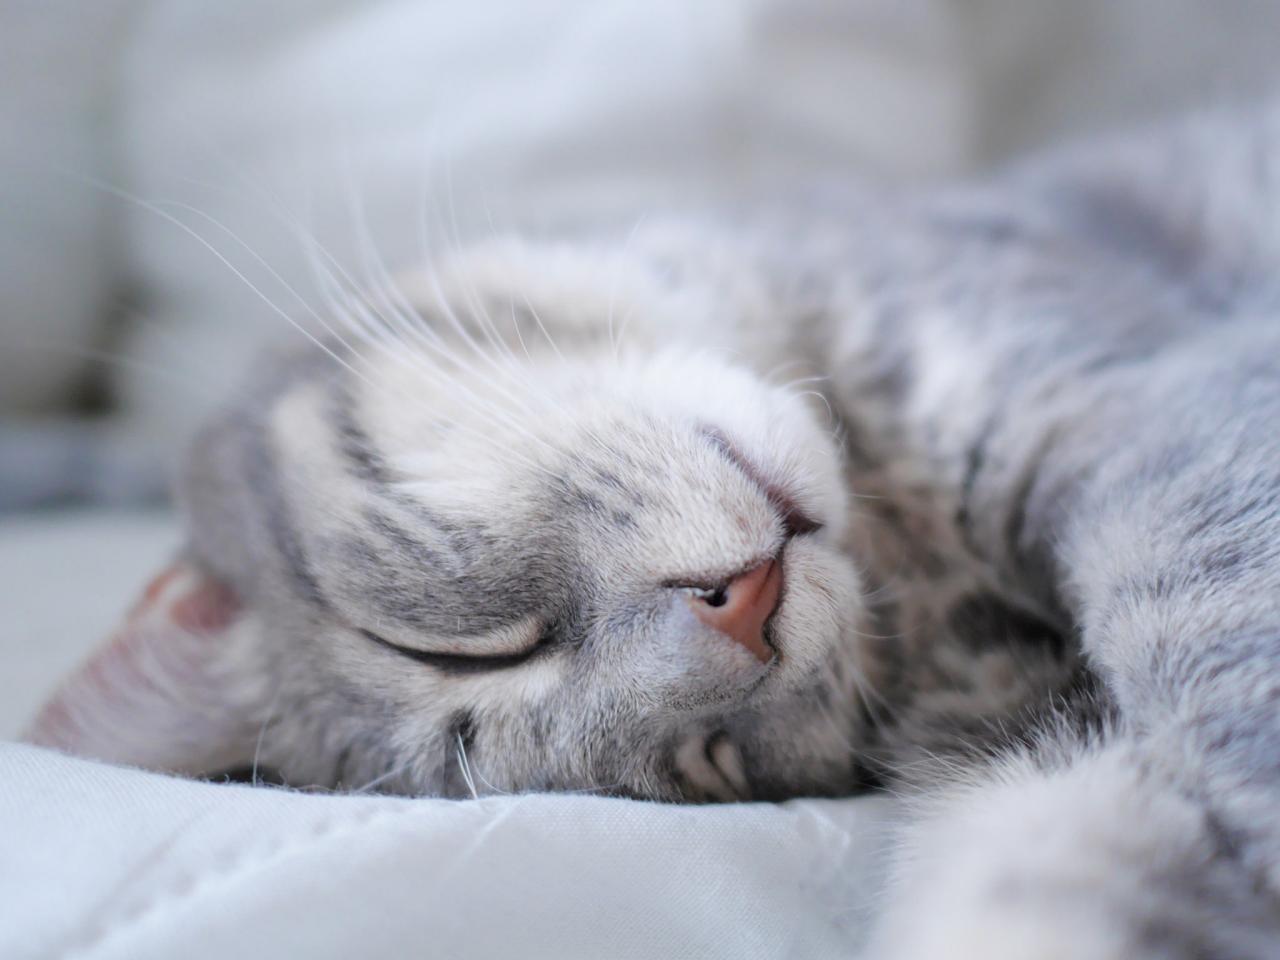 Camera Shows Cat Sleeping On Human's Face Overnight Bad Behavior